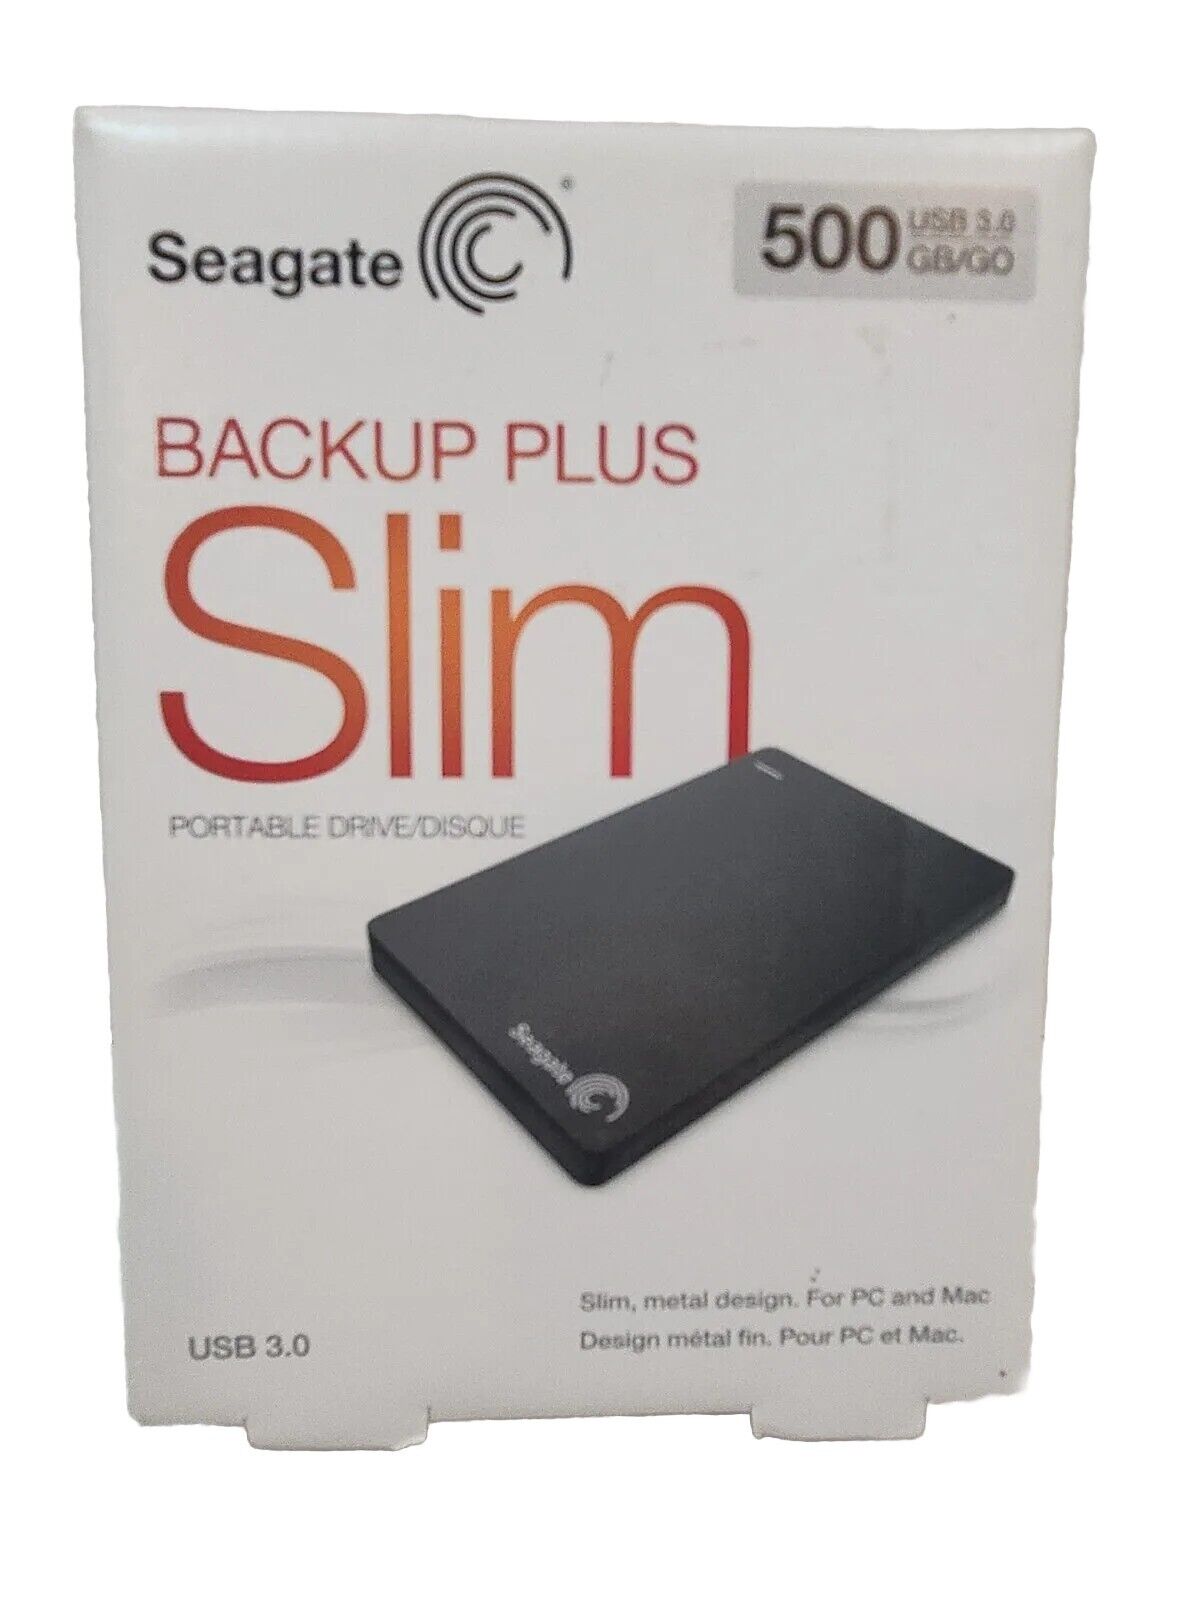 Seagate Backup Plus Slim External Portable Backup Drive 500 GB PC or MAC New 